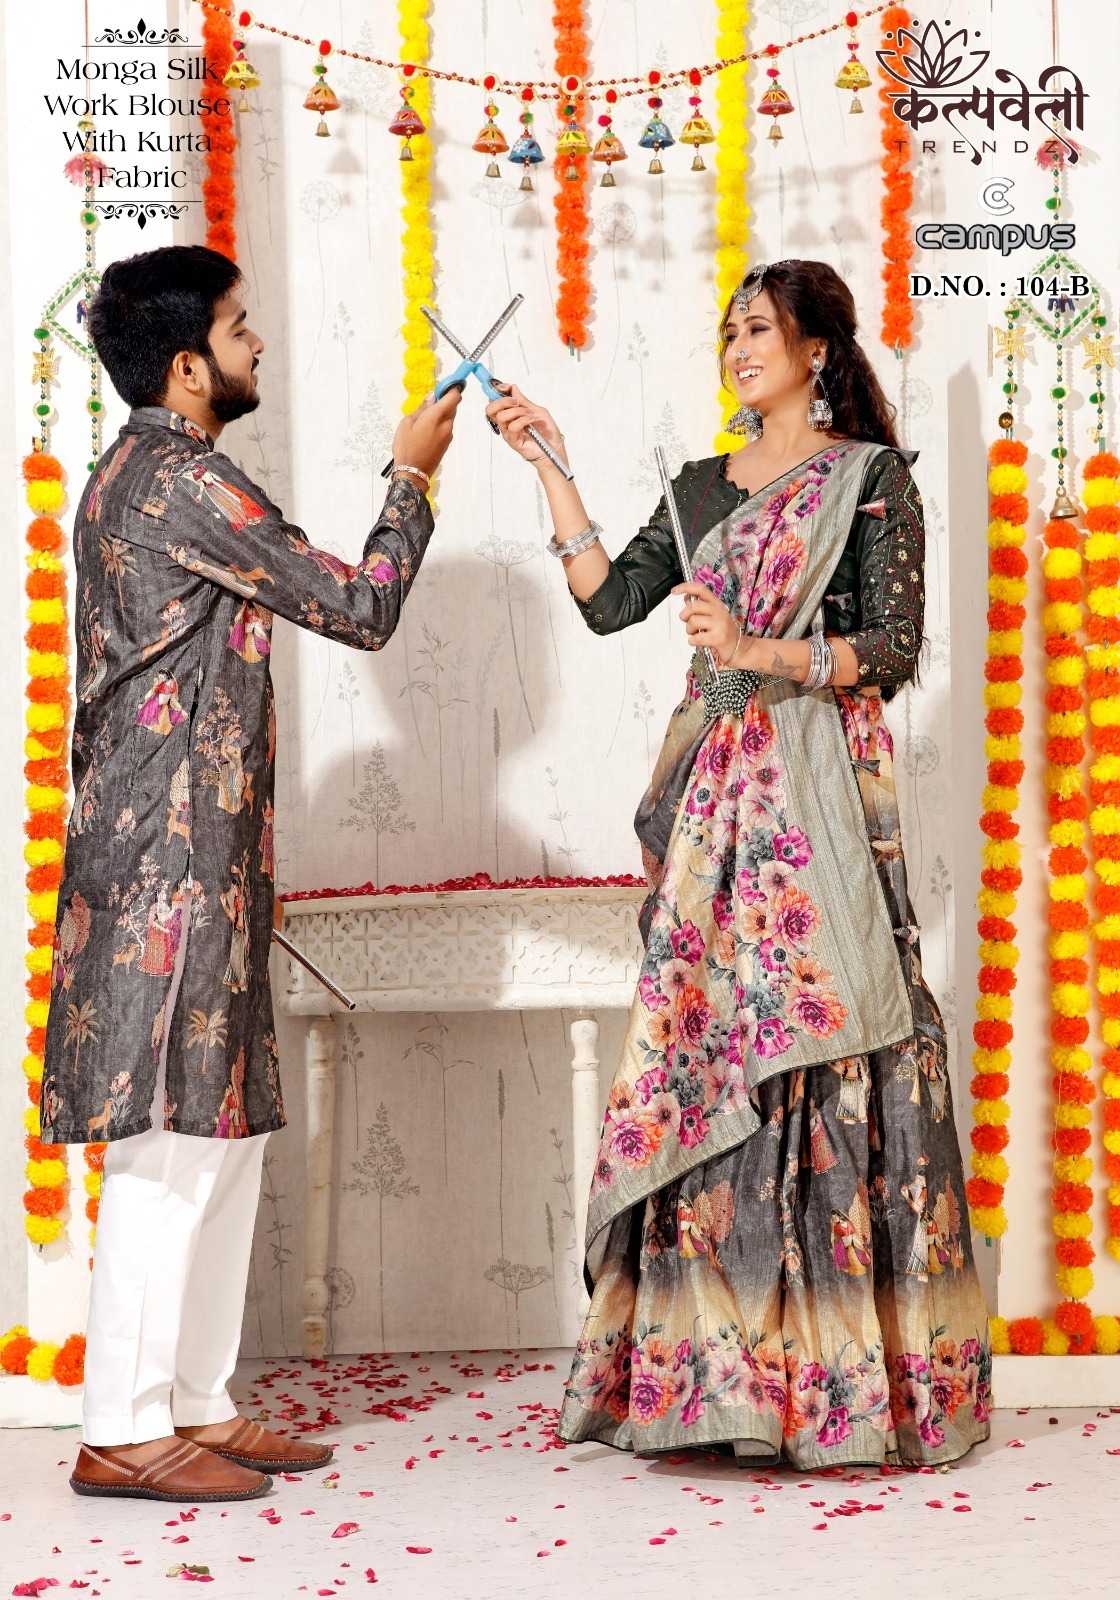 kalpavelly trendz campus 104 fancy silk saree with unstitch kurta for couples navratri wear